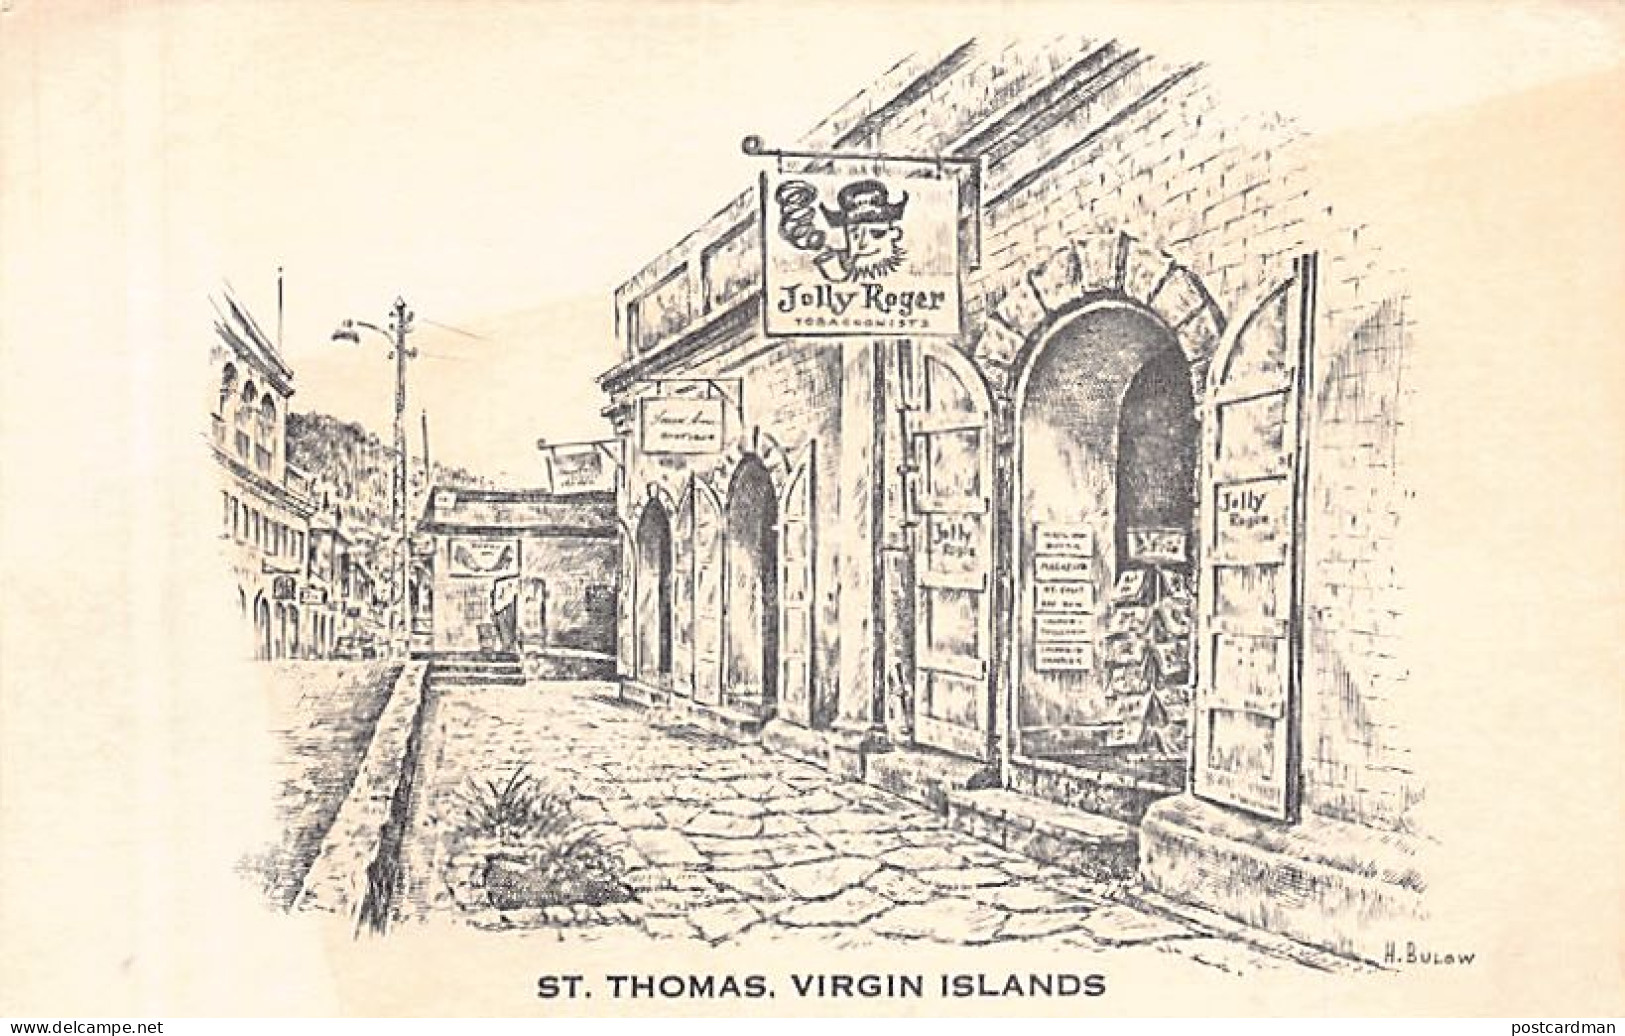 U.S. Virgin Islands - ST. THOMAS - Jolly Roger - Tobacconists - Publ. Hans Bulow  - Vierges (Iles), Amér.